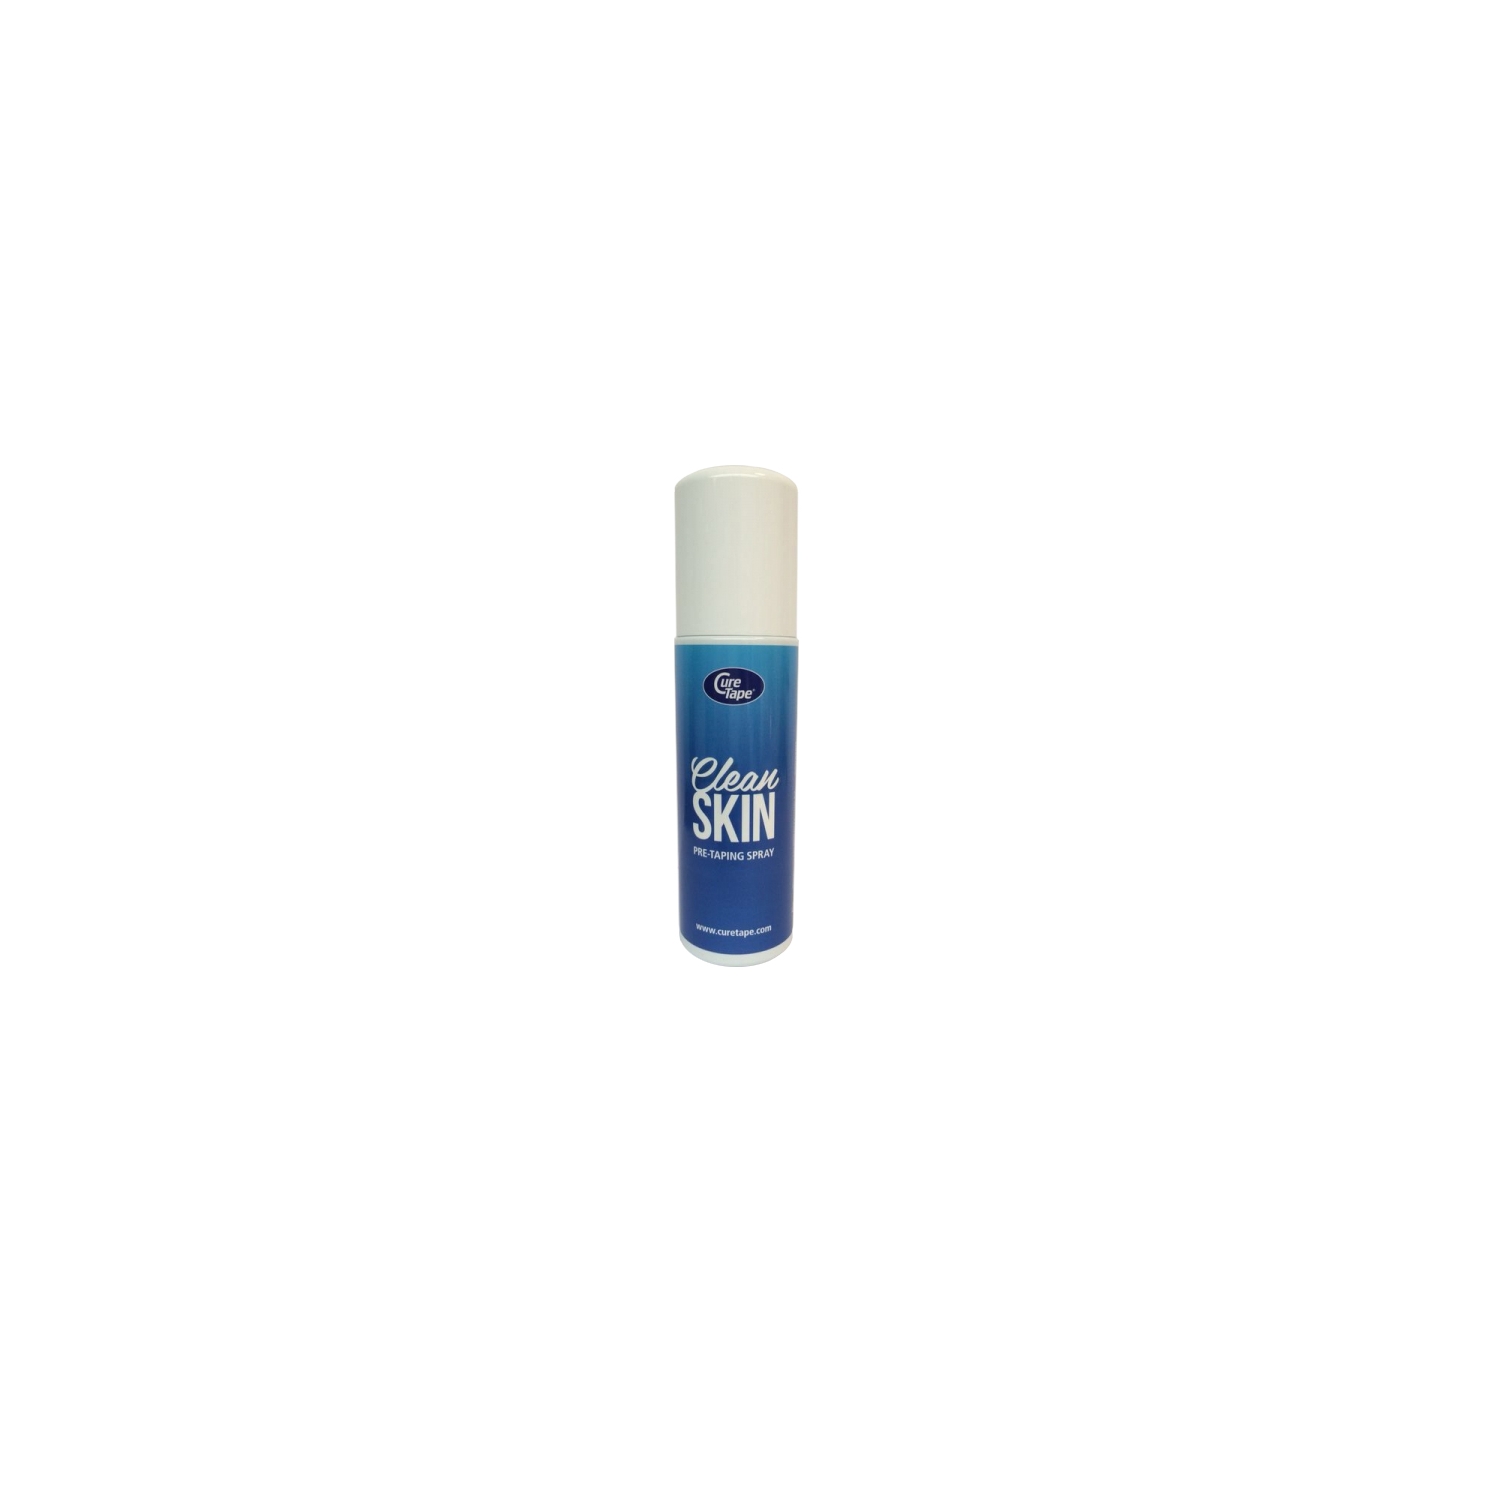 CureTape Clean Skin spray - 200 ml